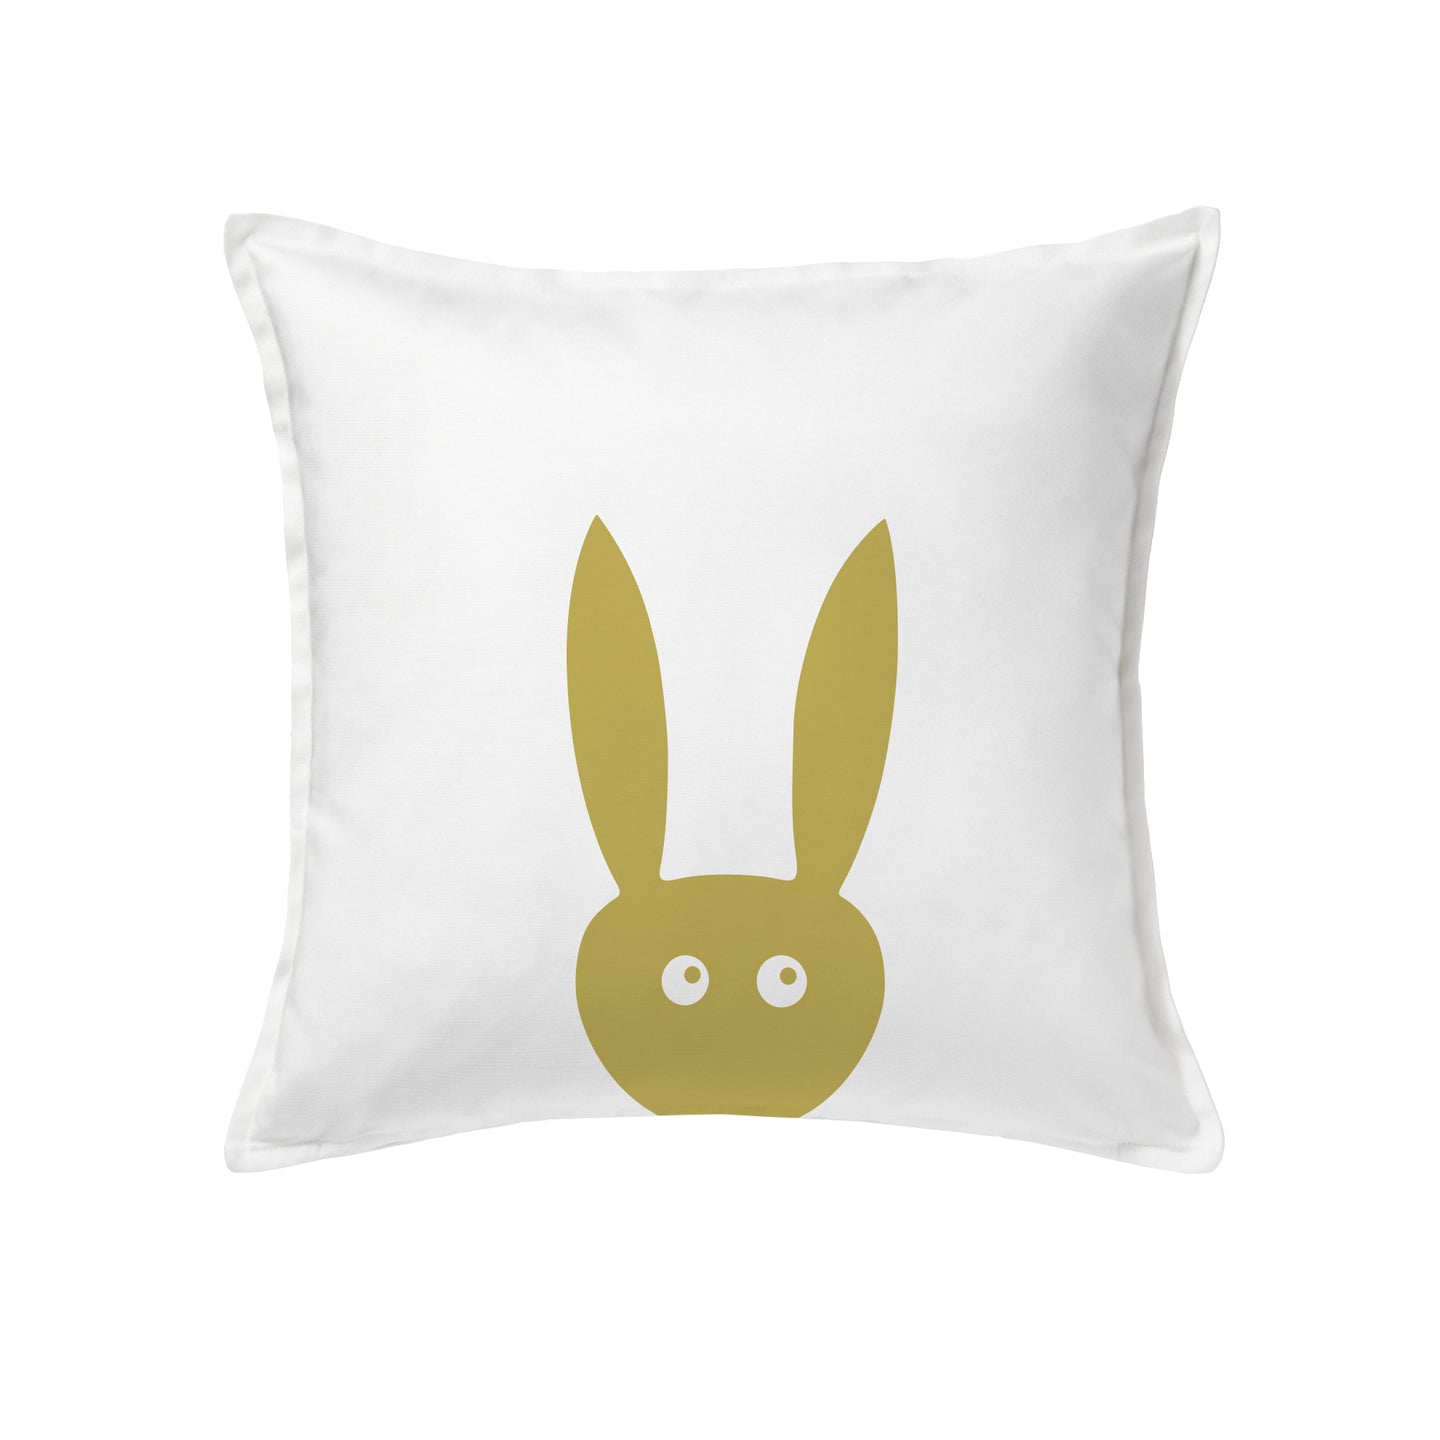 Rabbit cushion or cover 50x50cm (20x20